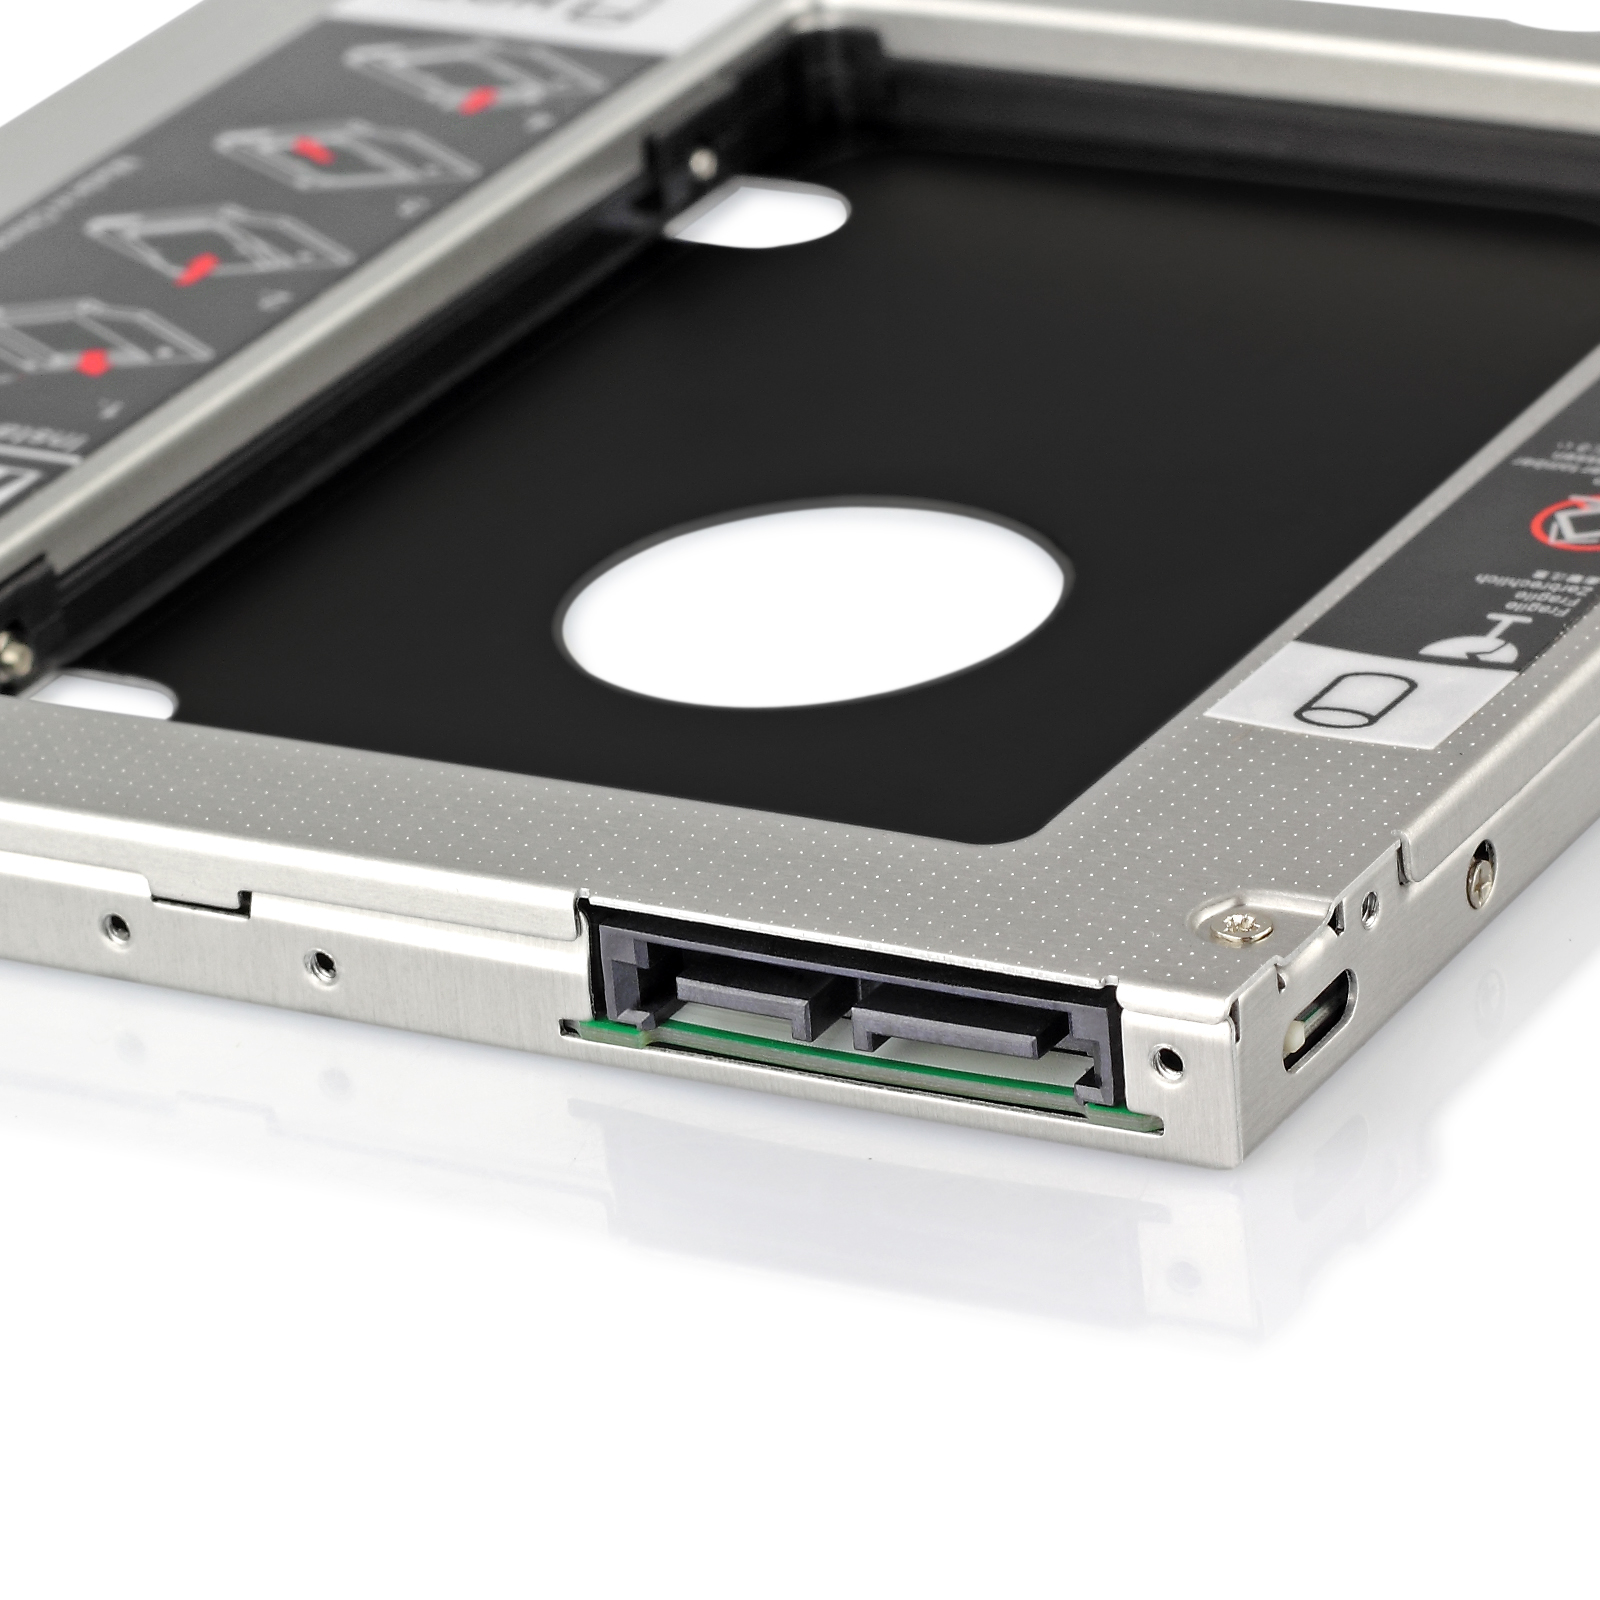 macbook pro 2012 external hard drive